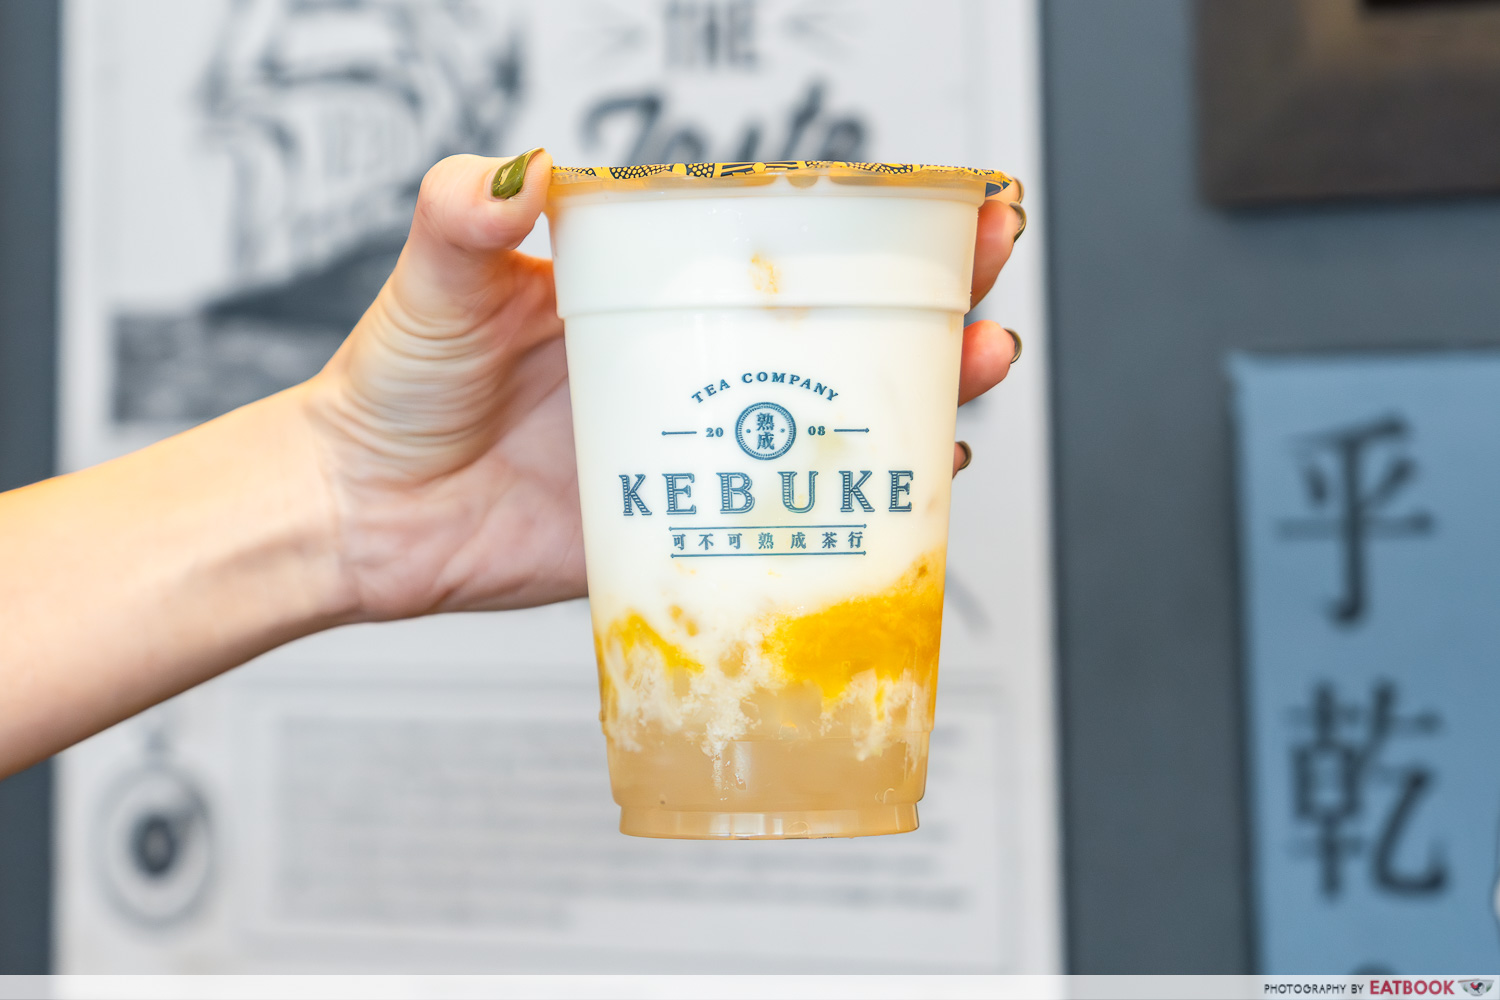 kebuke-singapore-jasmine-green-tea-latte-with-proton-mango